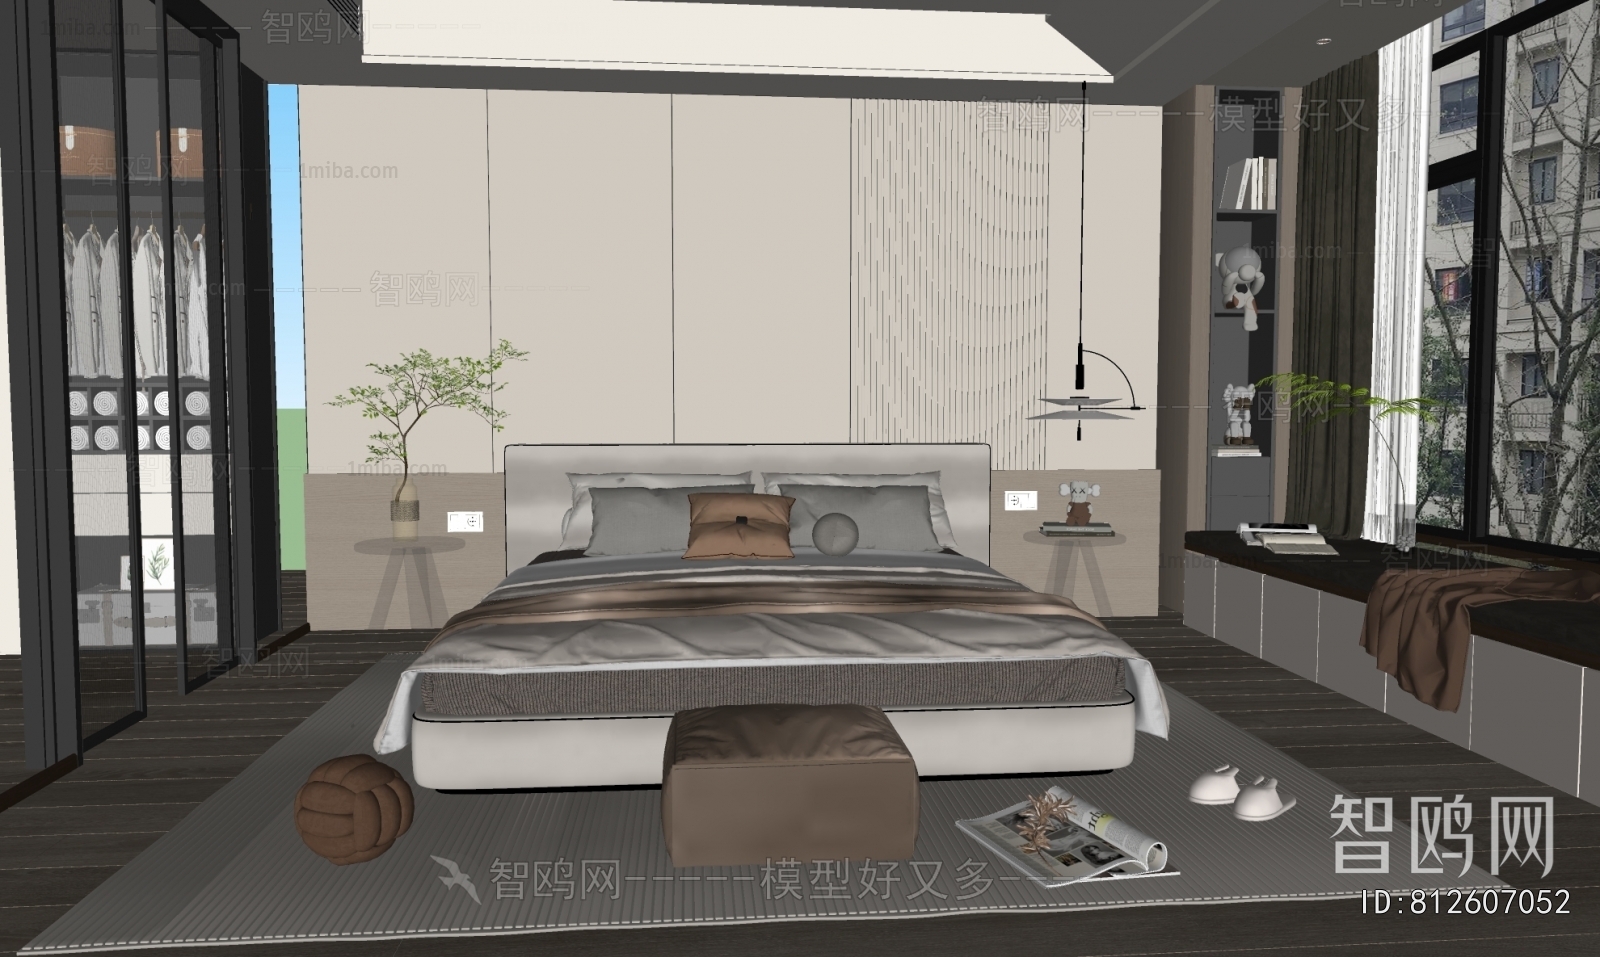 Modern Bedroom